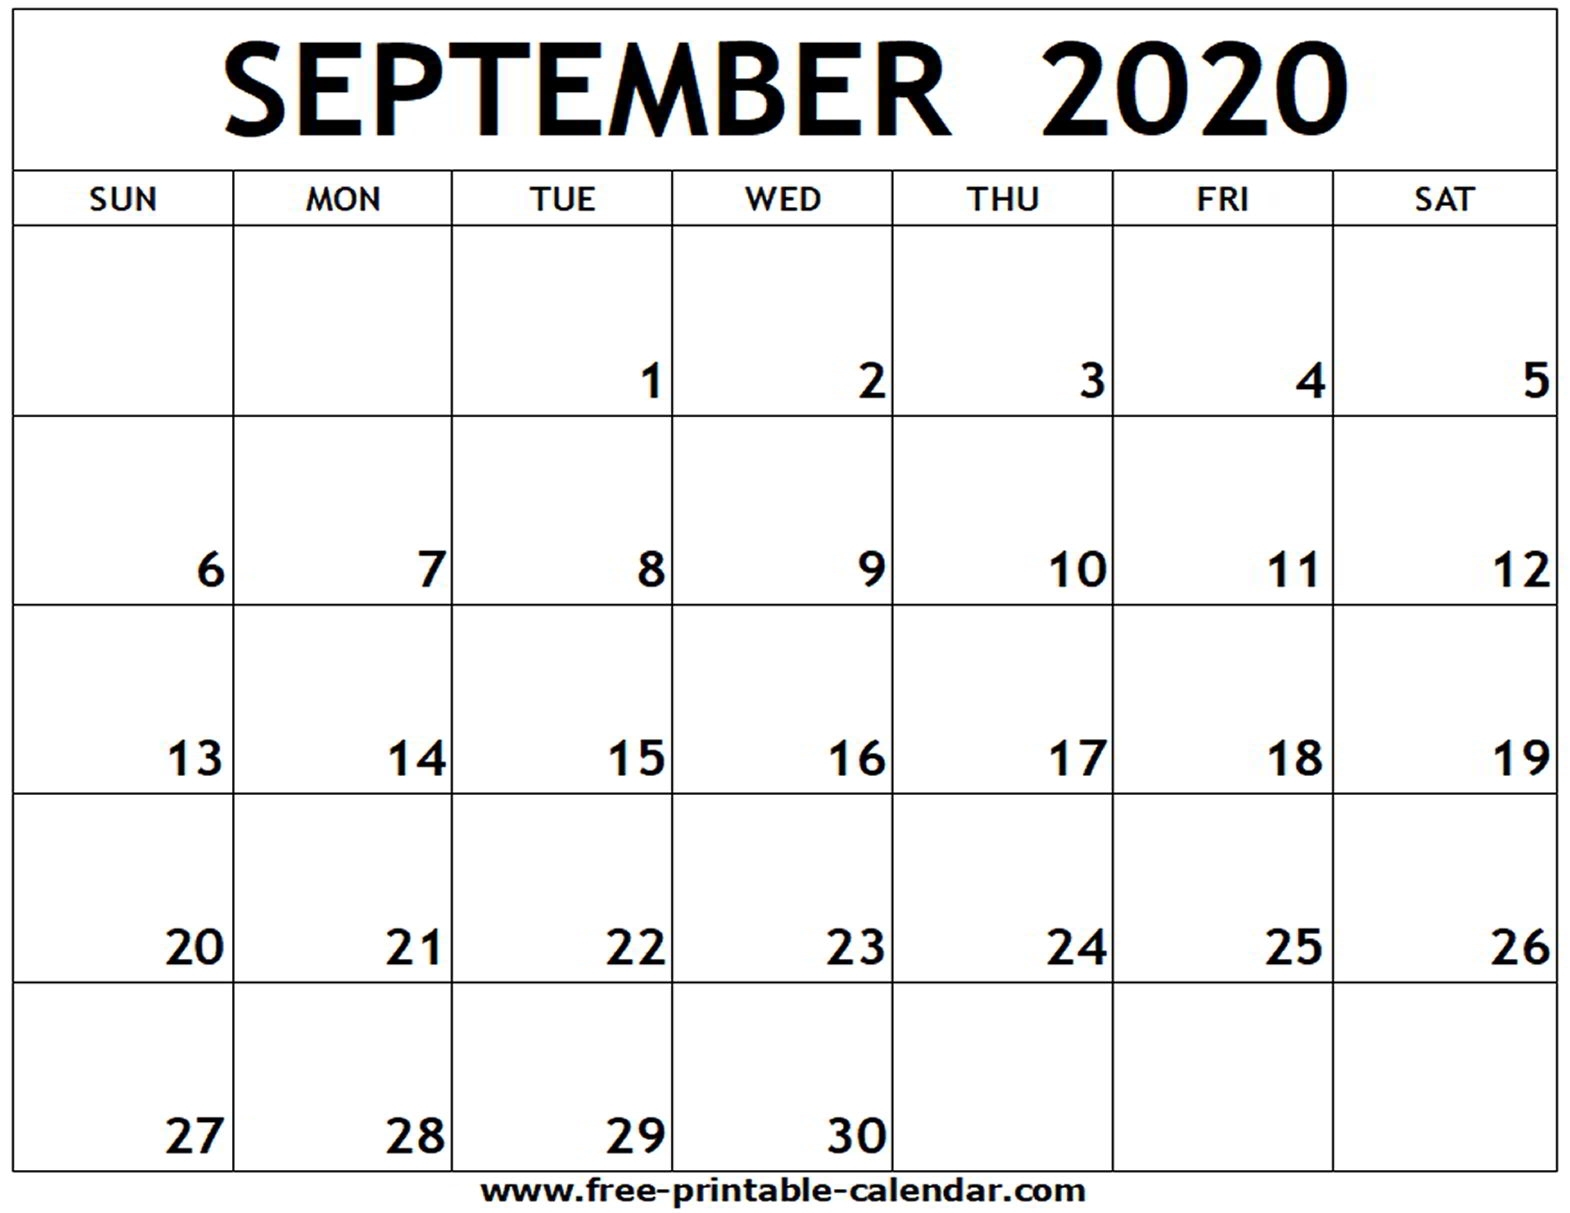 September 2020 Printable Calendar - Free-Printable-Calendar